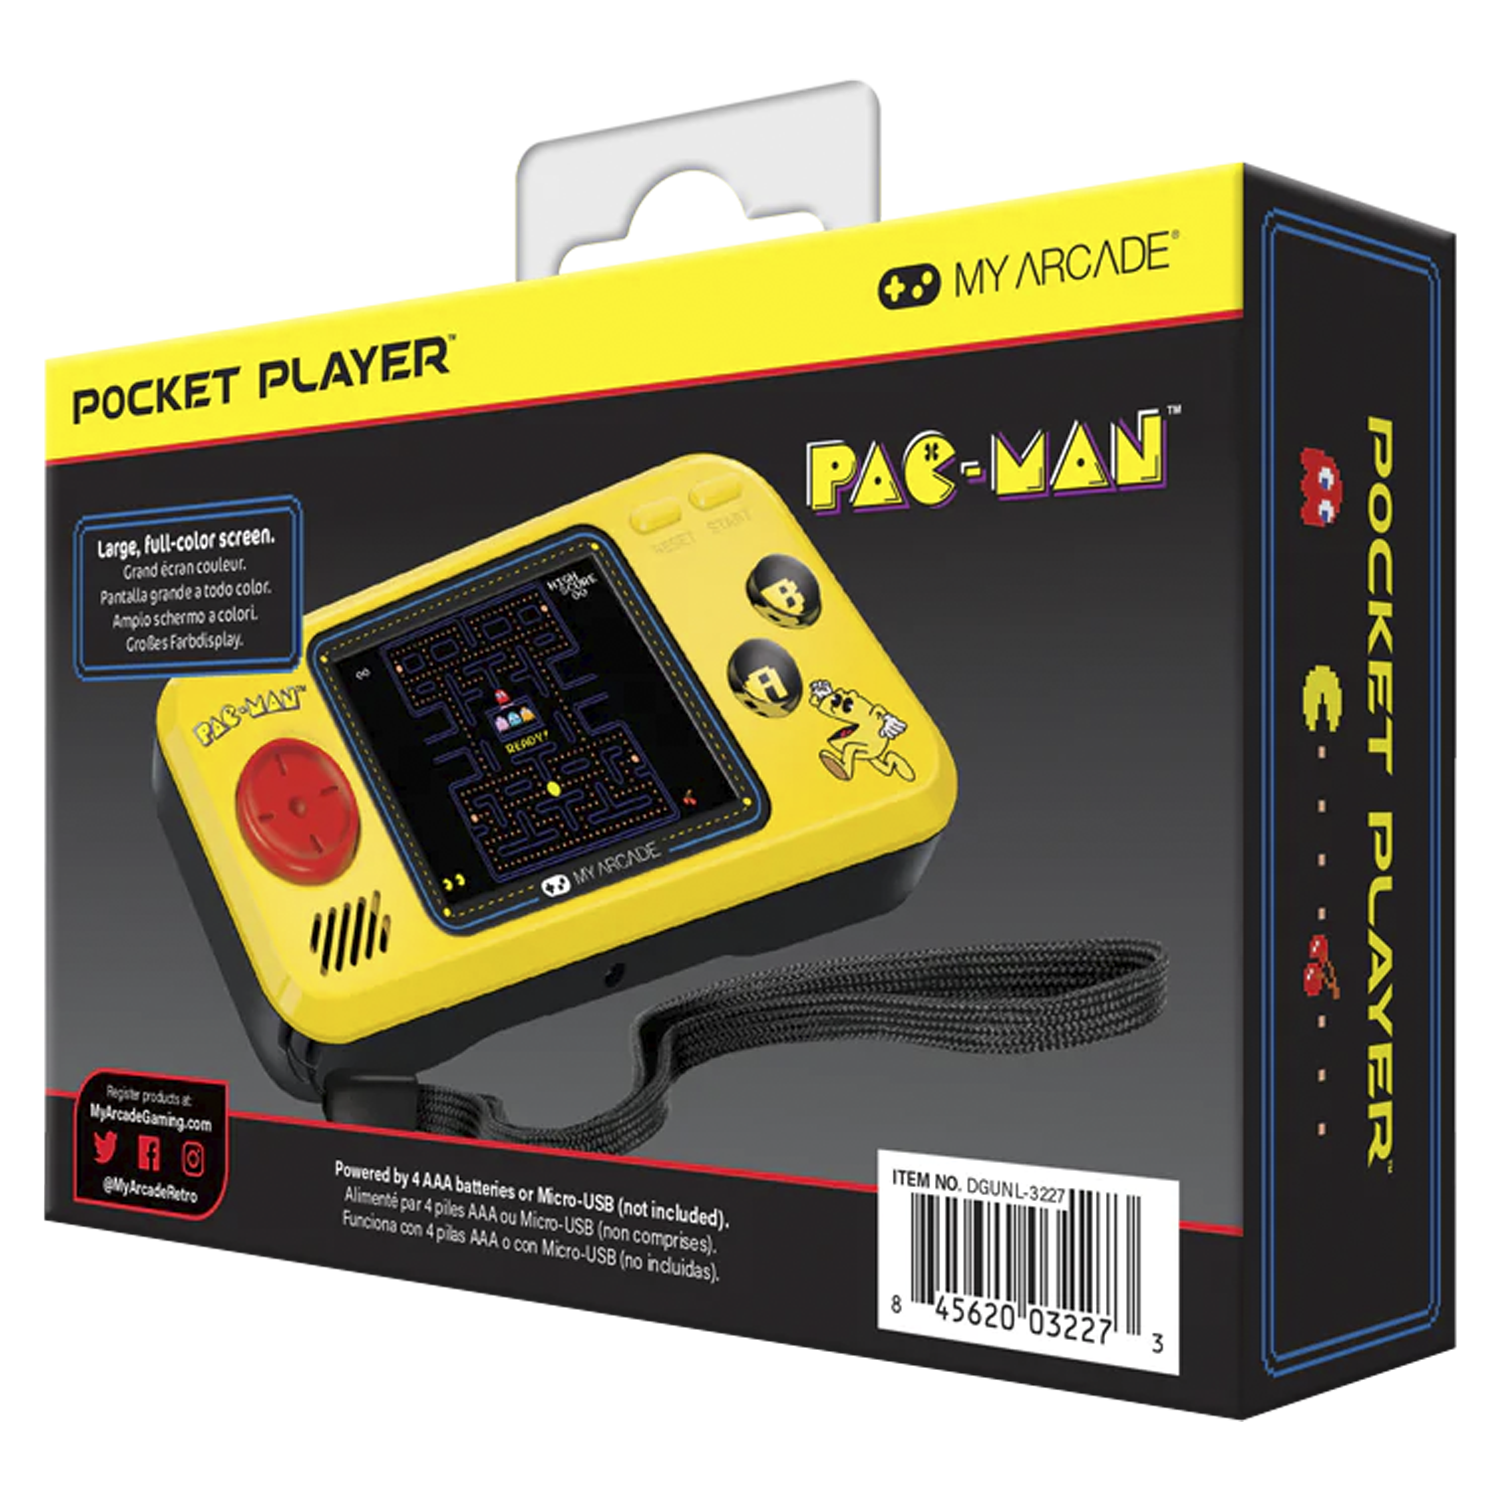 Console My Arcade PAC-MAN Pocket Player - Amarelo (DGUNL-3227)